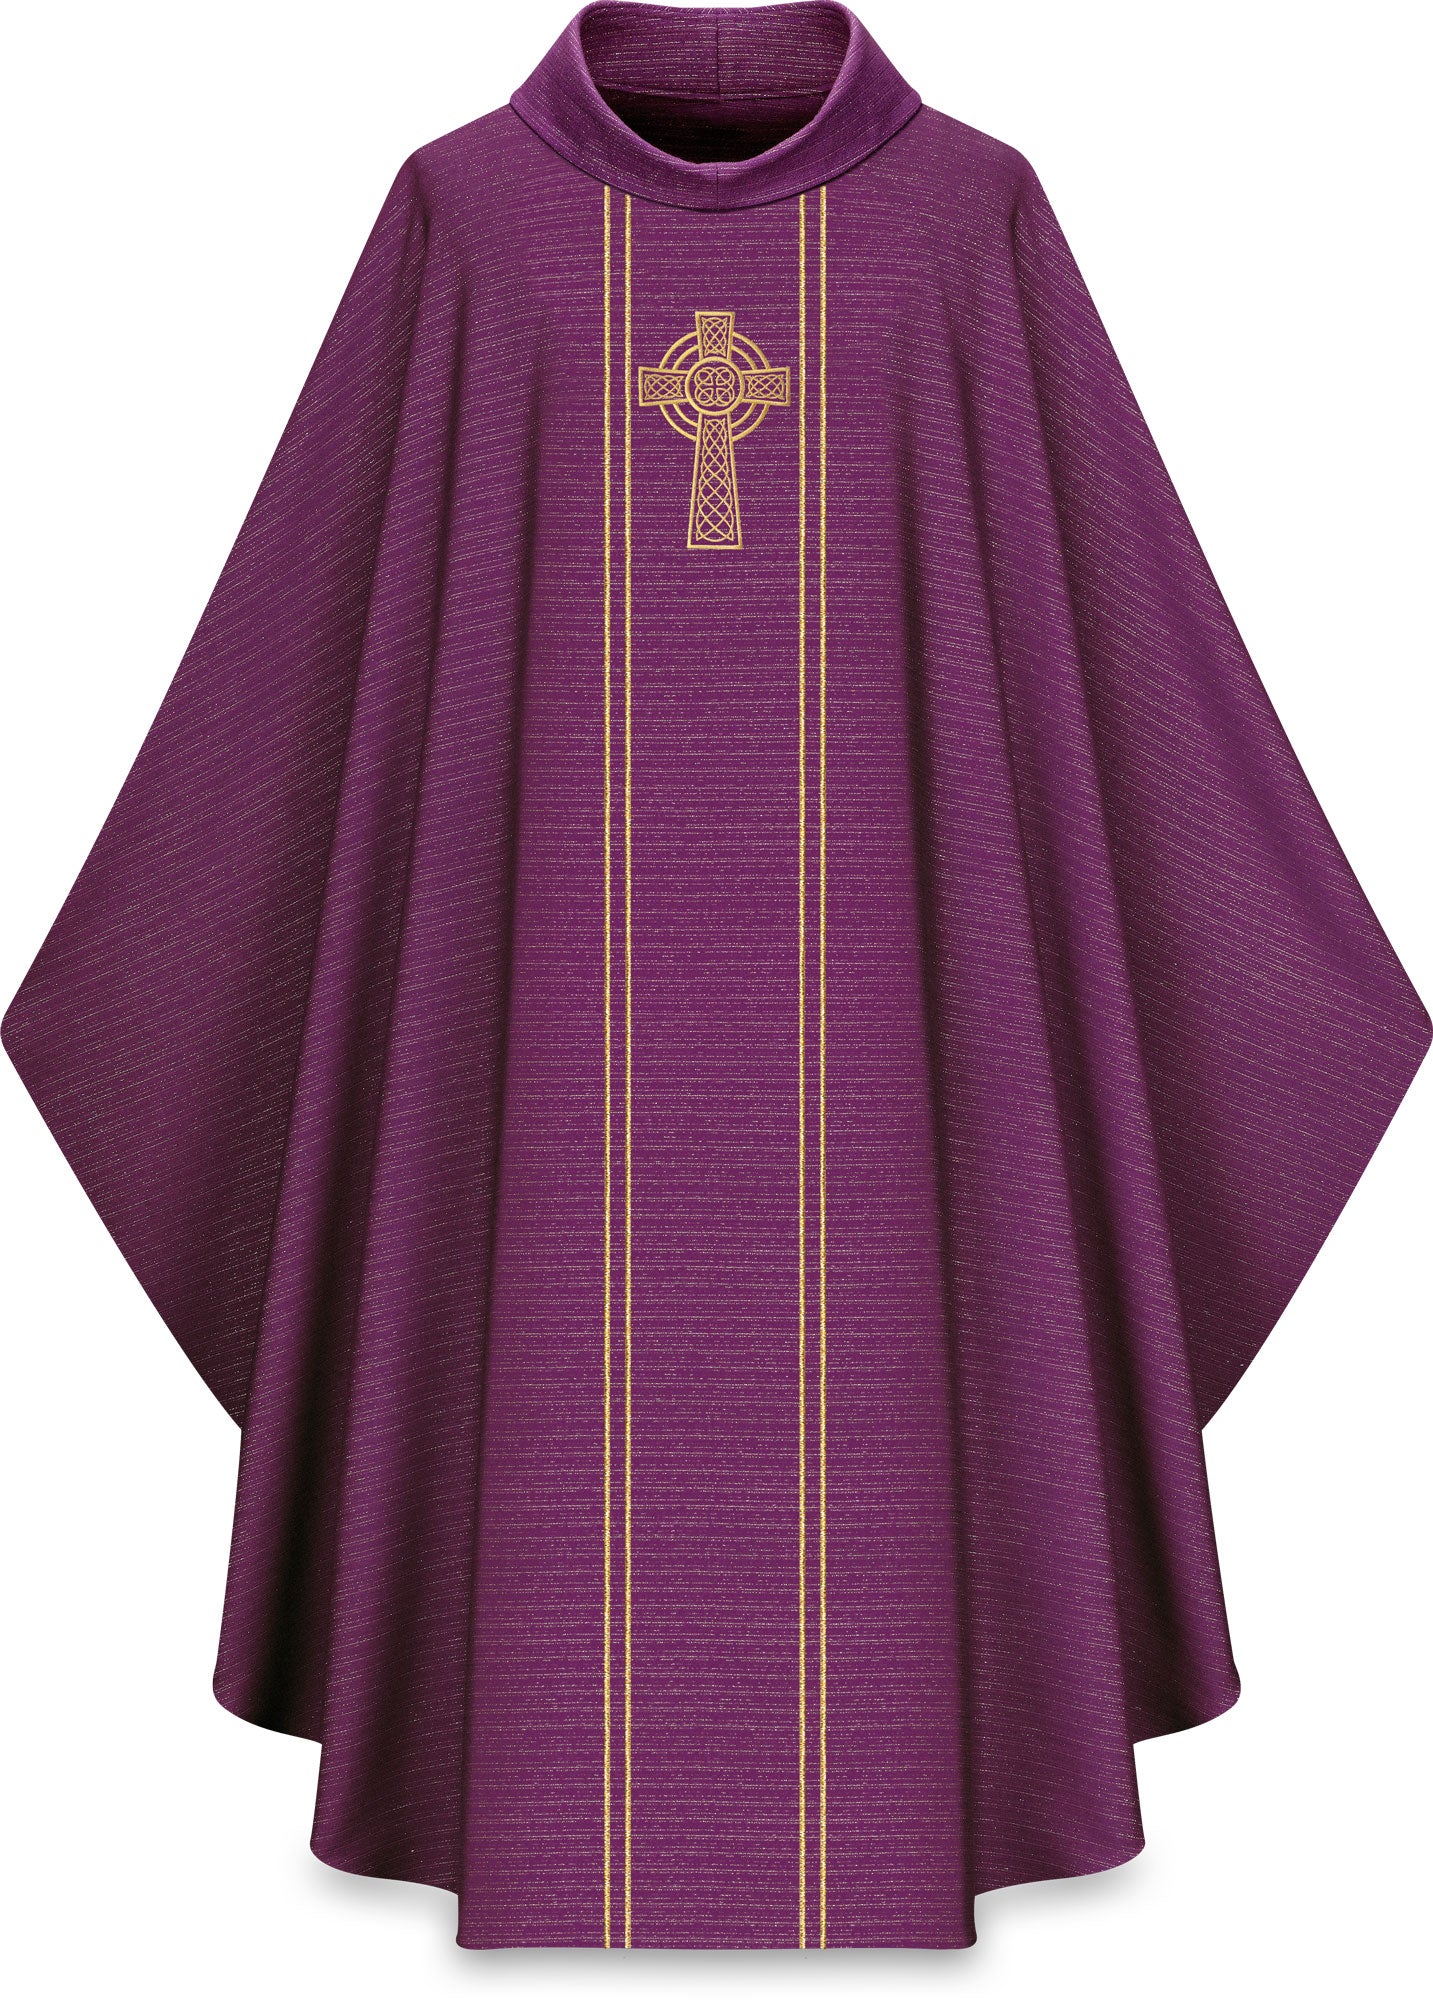 chasuble-celtic-cross-purple-5195.jpg